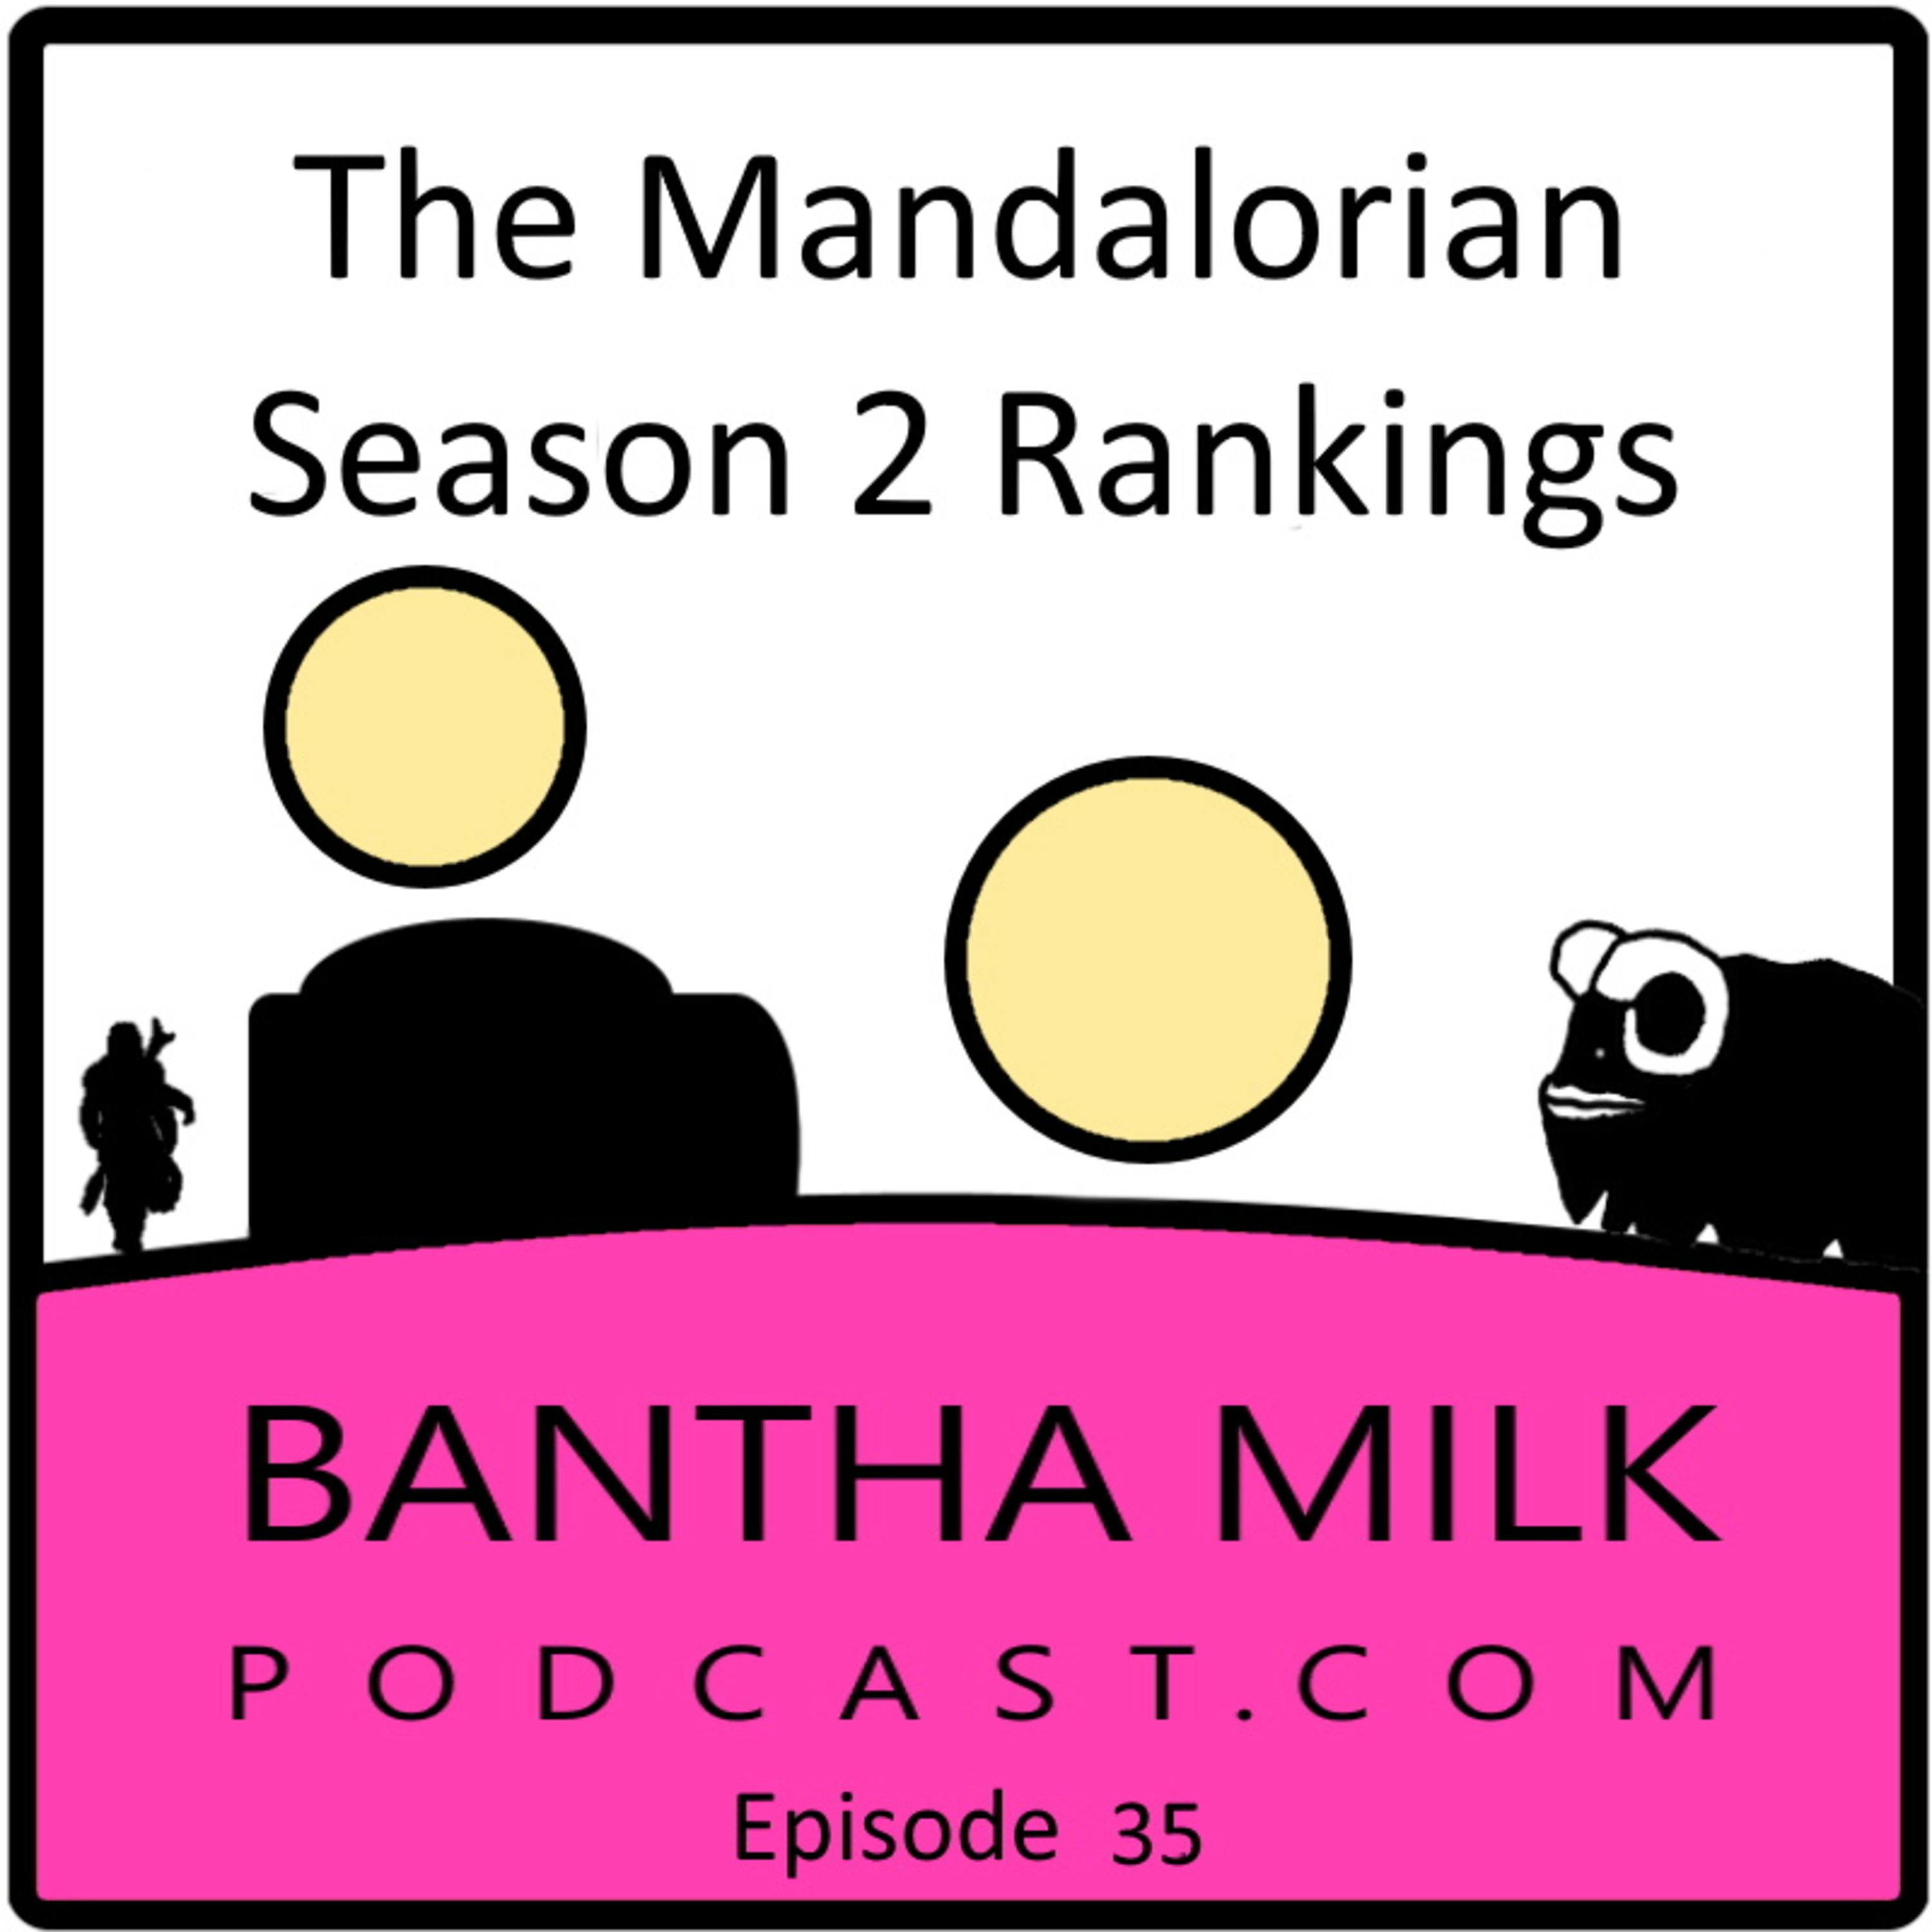 The Mandalorian Season 2 Review and Rankings.